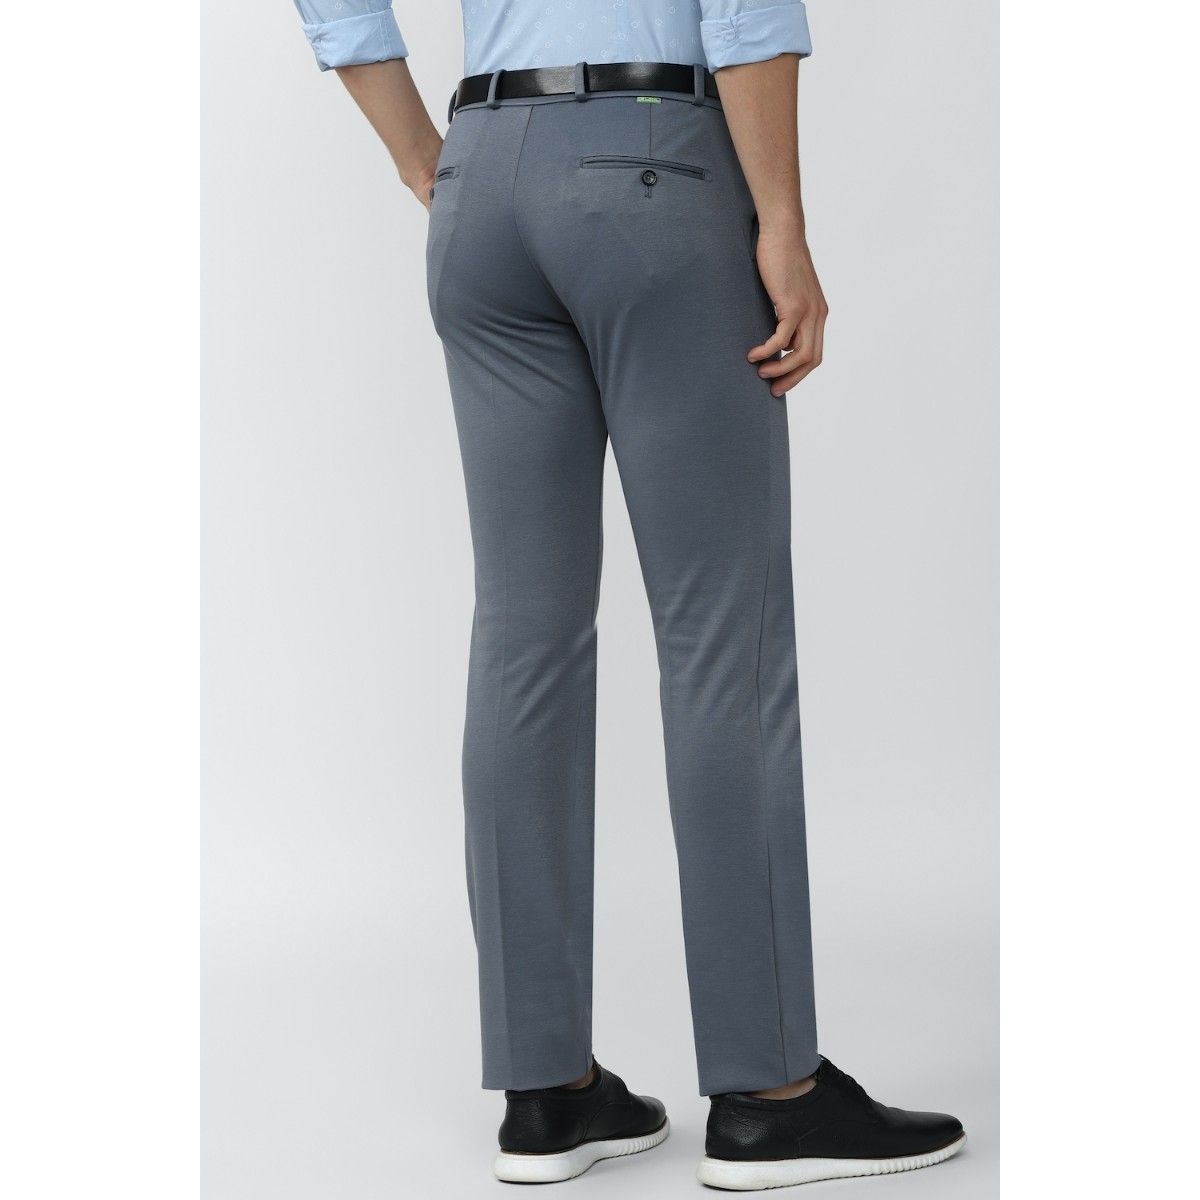 Buy Men Grey Solid Slim Fit Formal Trousers Online - 936451 | Peter England